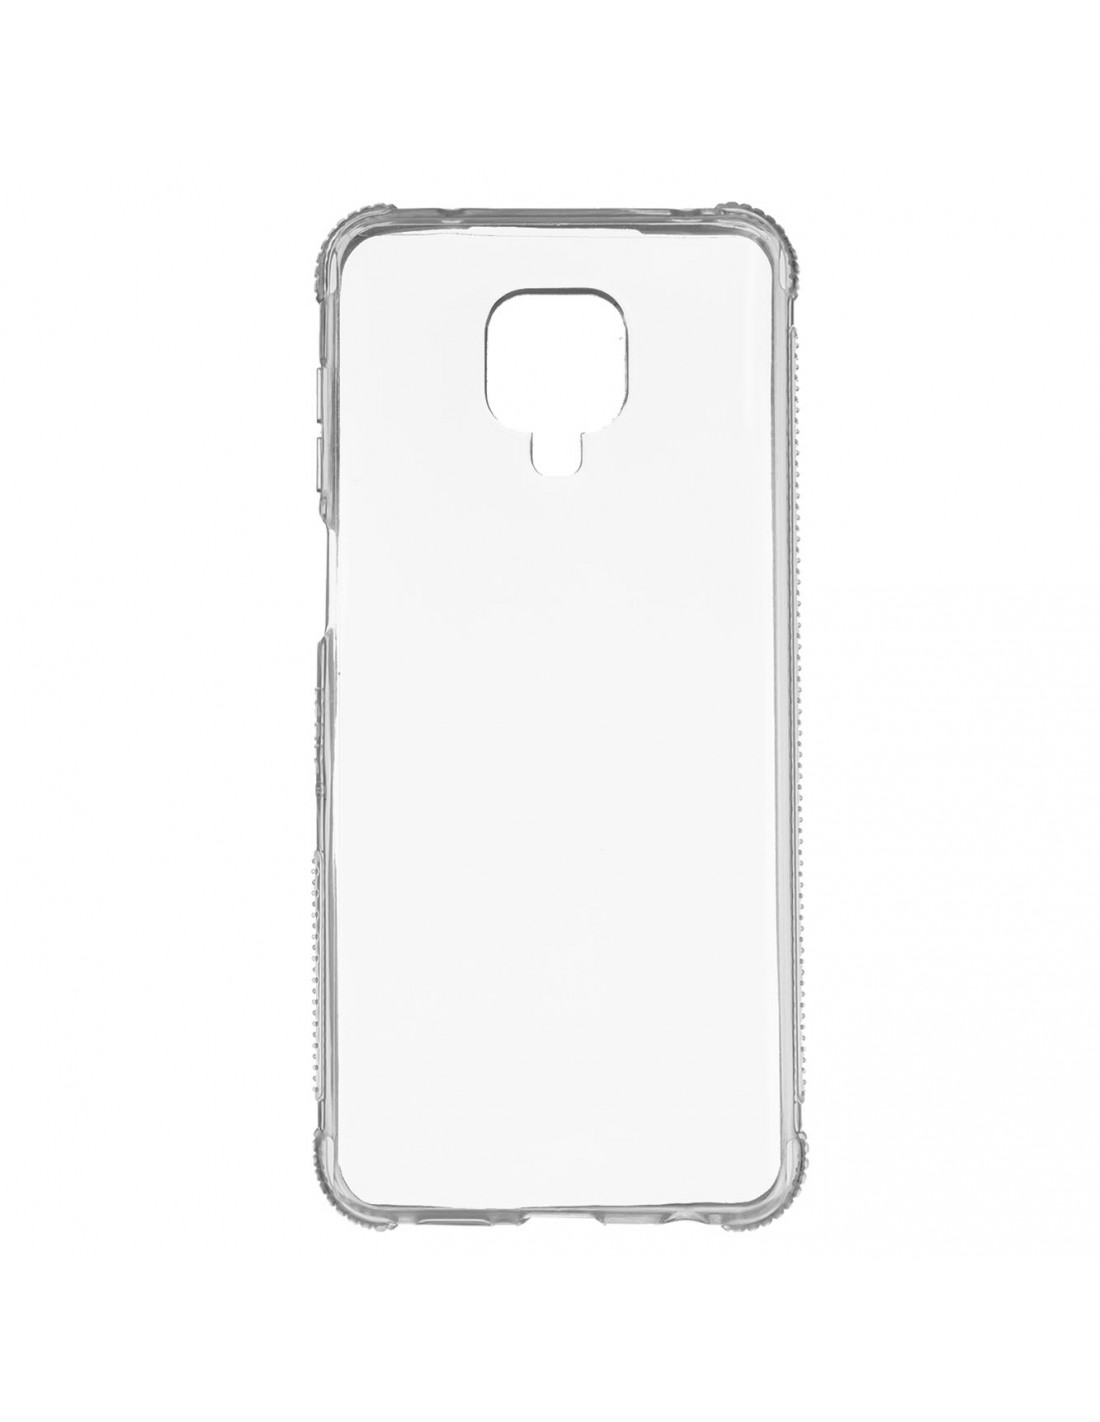 Carcasa transparente Reforzada Xiaomi Redmi 9a